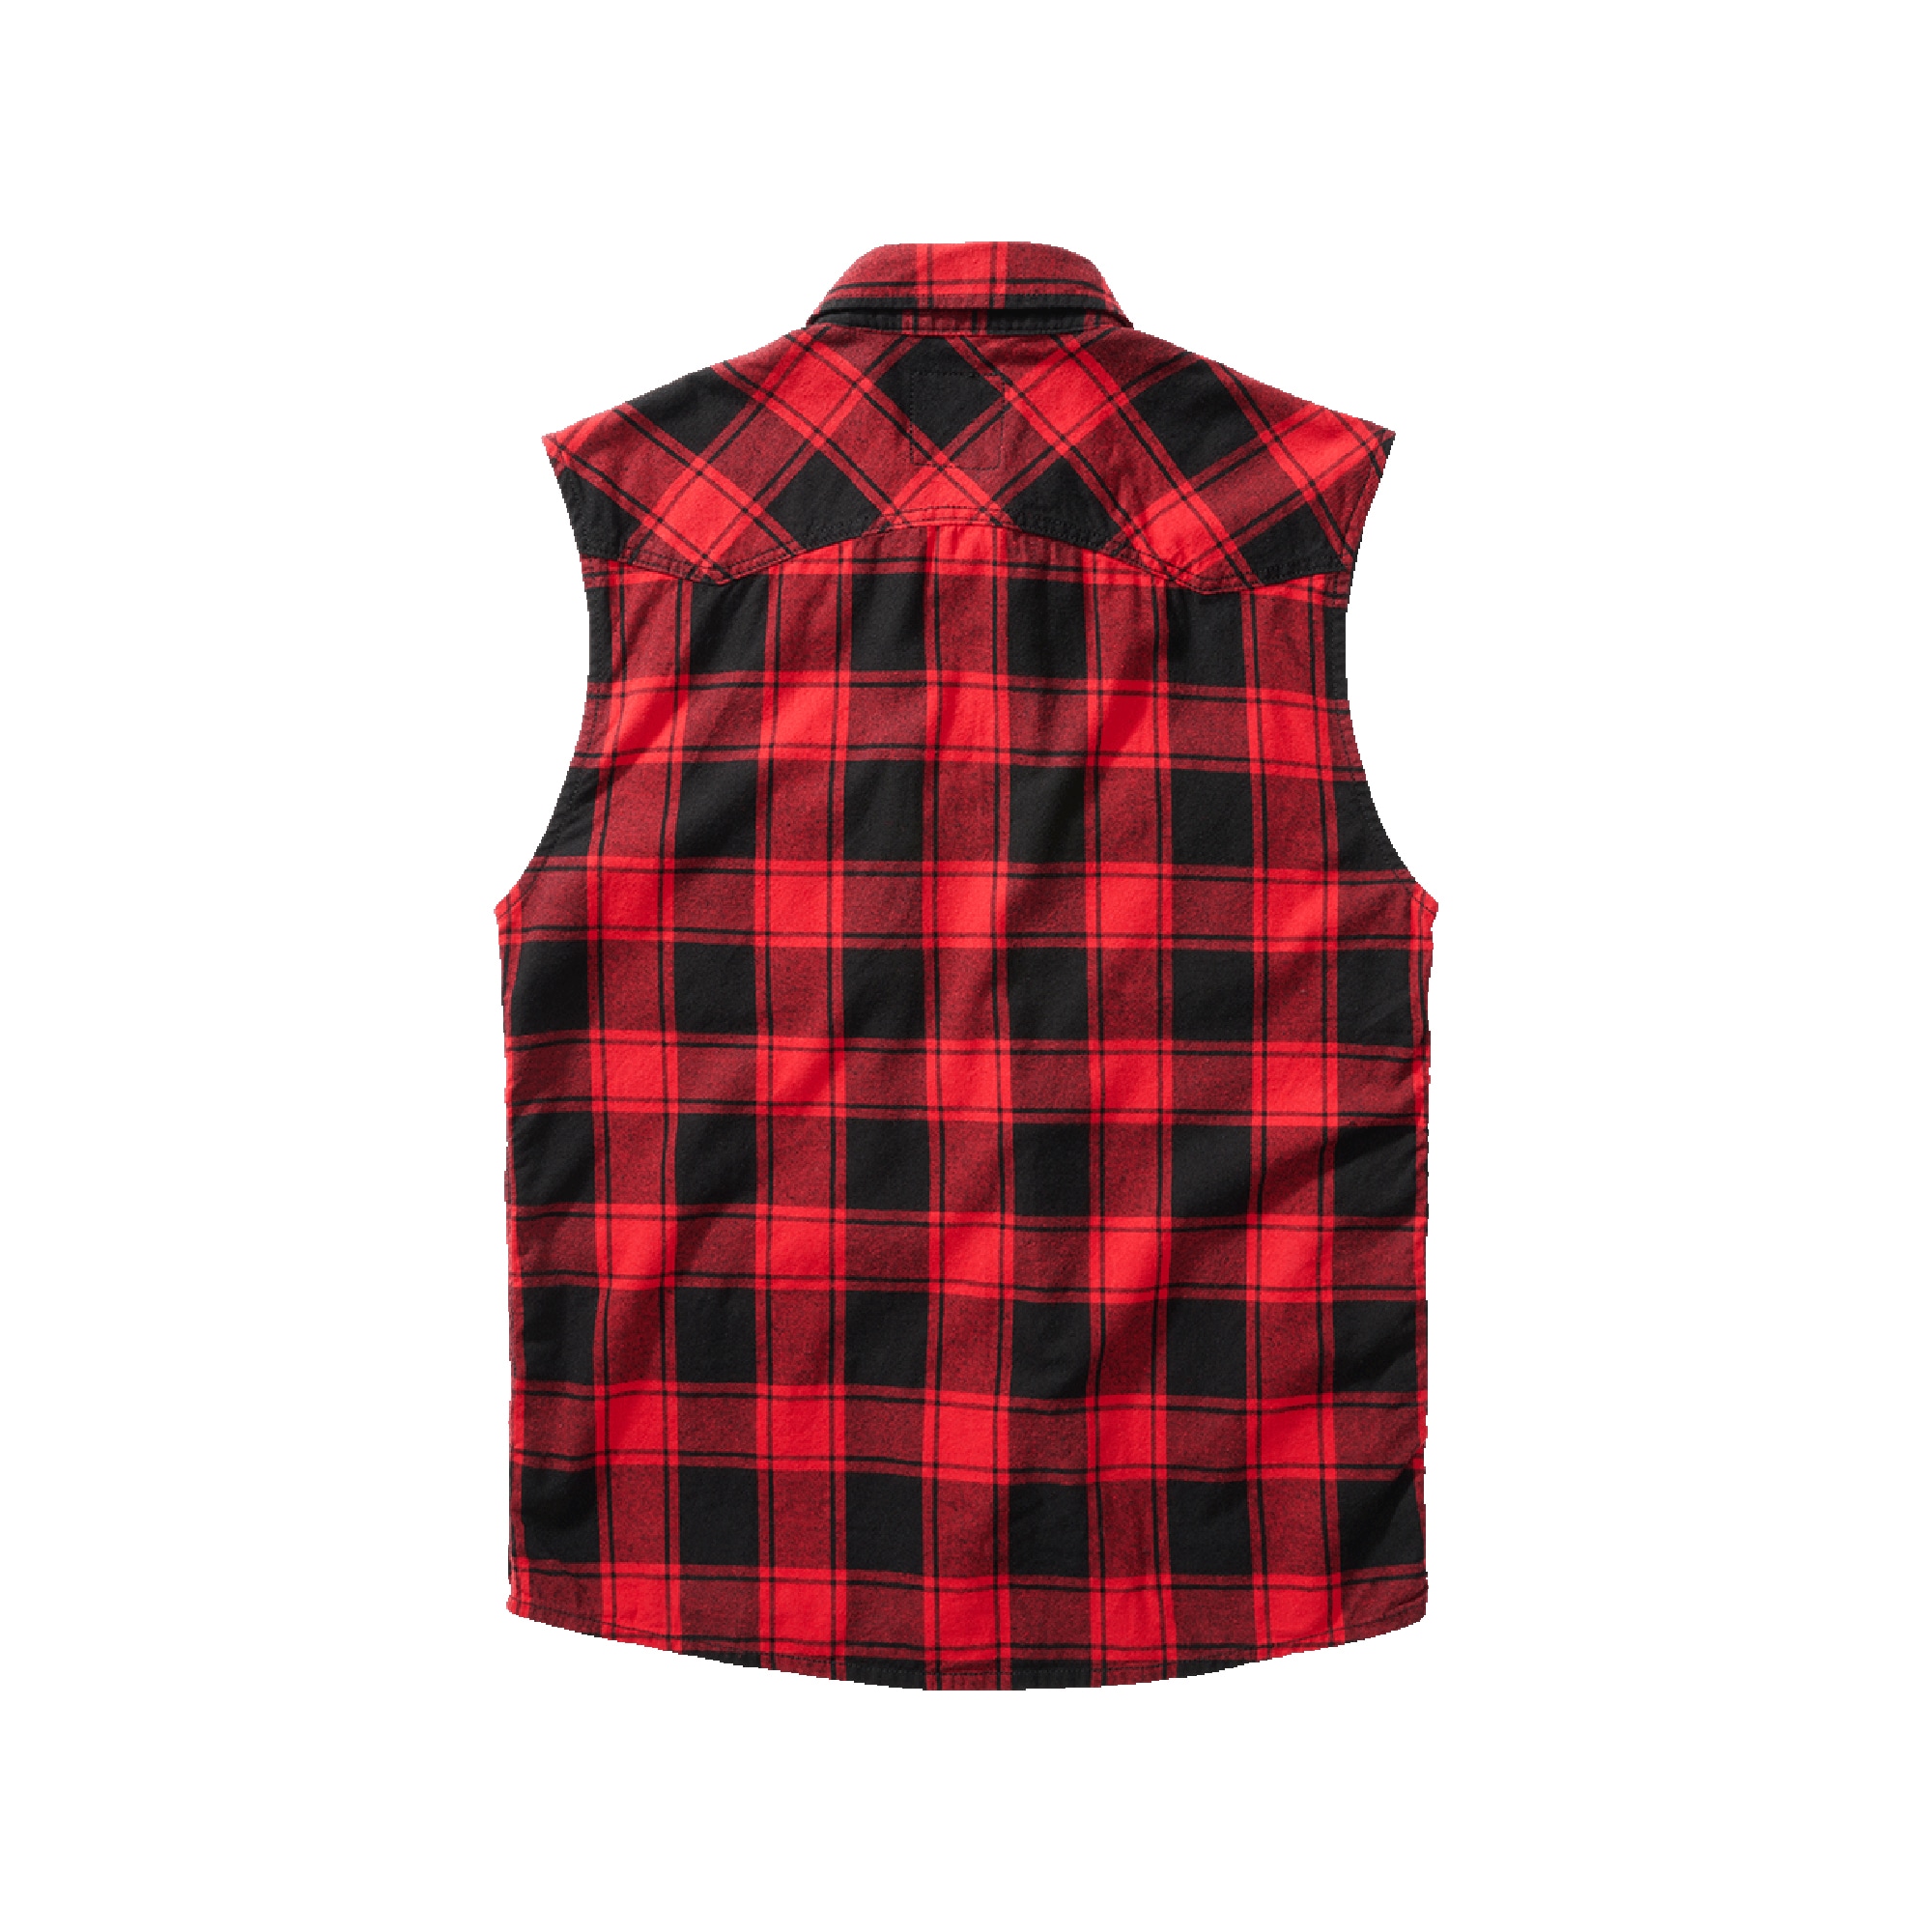 Purchase the Brandit Check Shirt Sleeveless red/black by ASMC